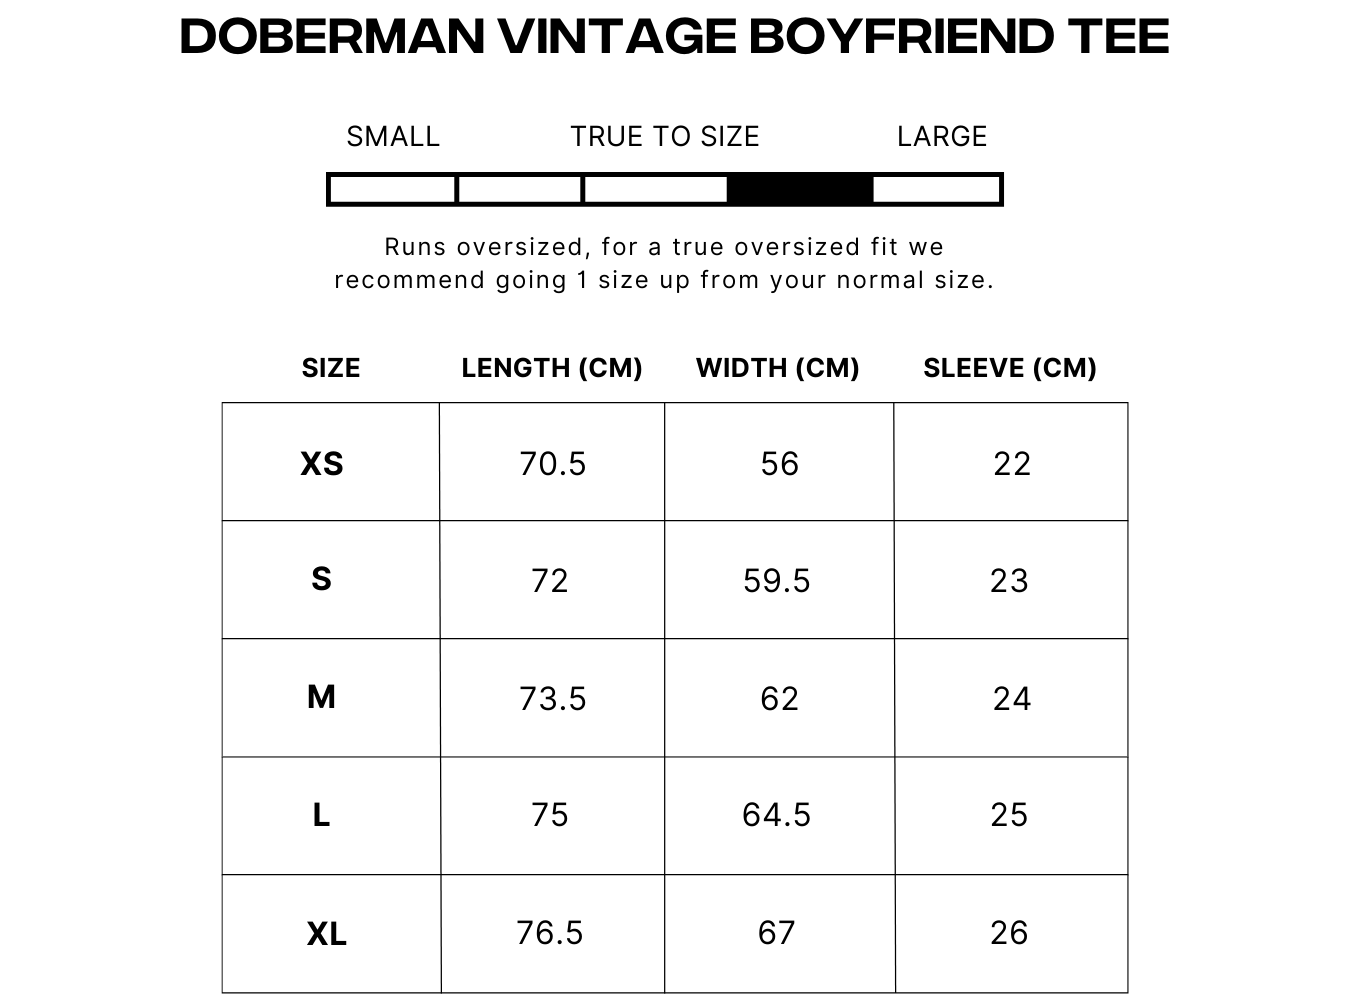 Doberman Vintage Boyfriend Tee